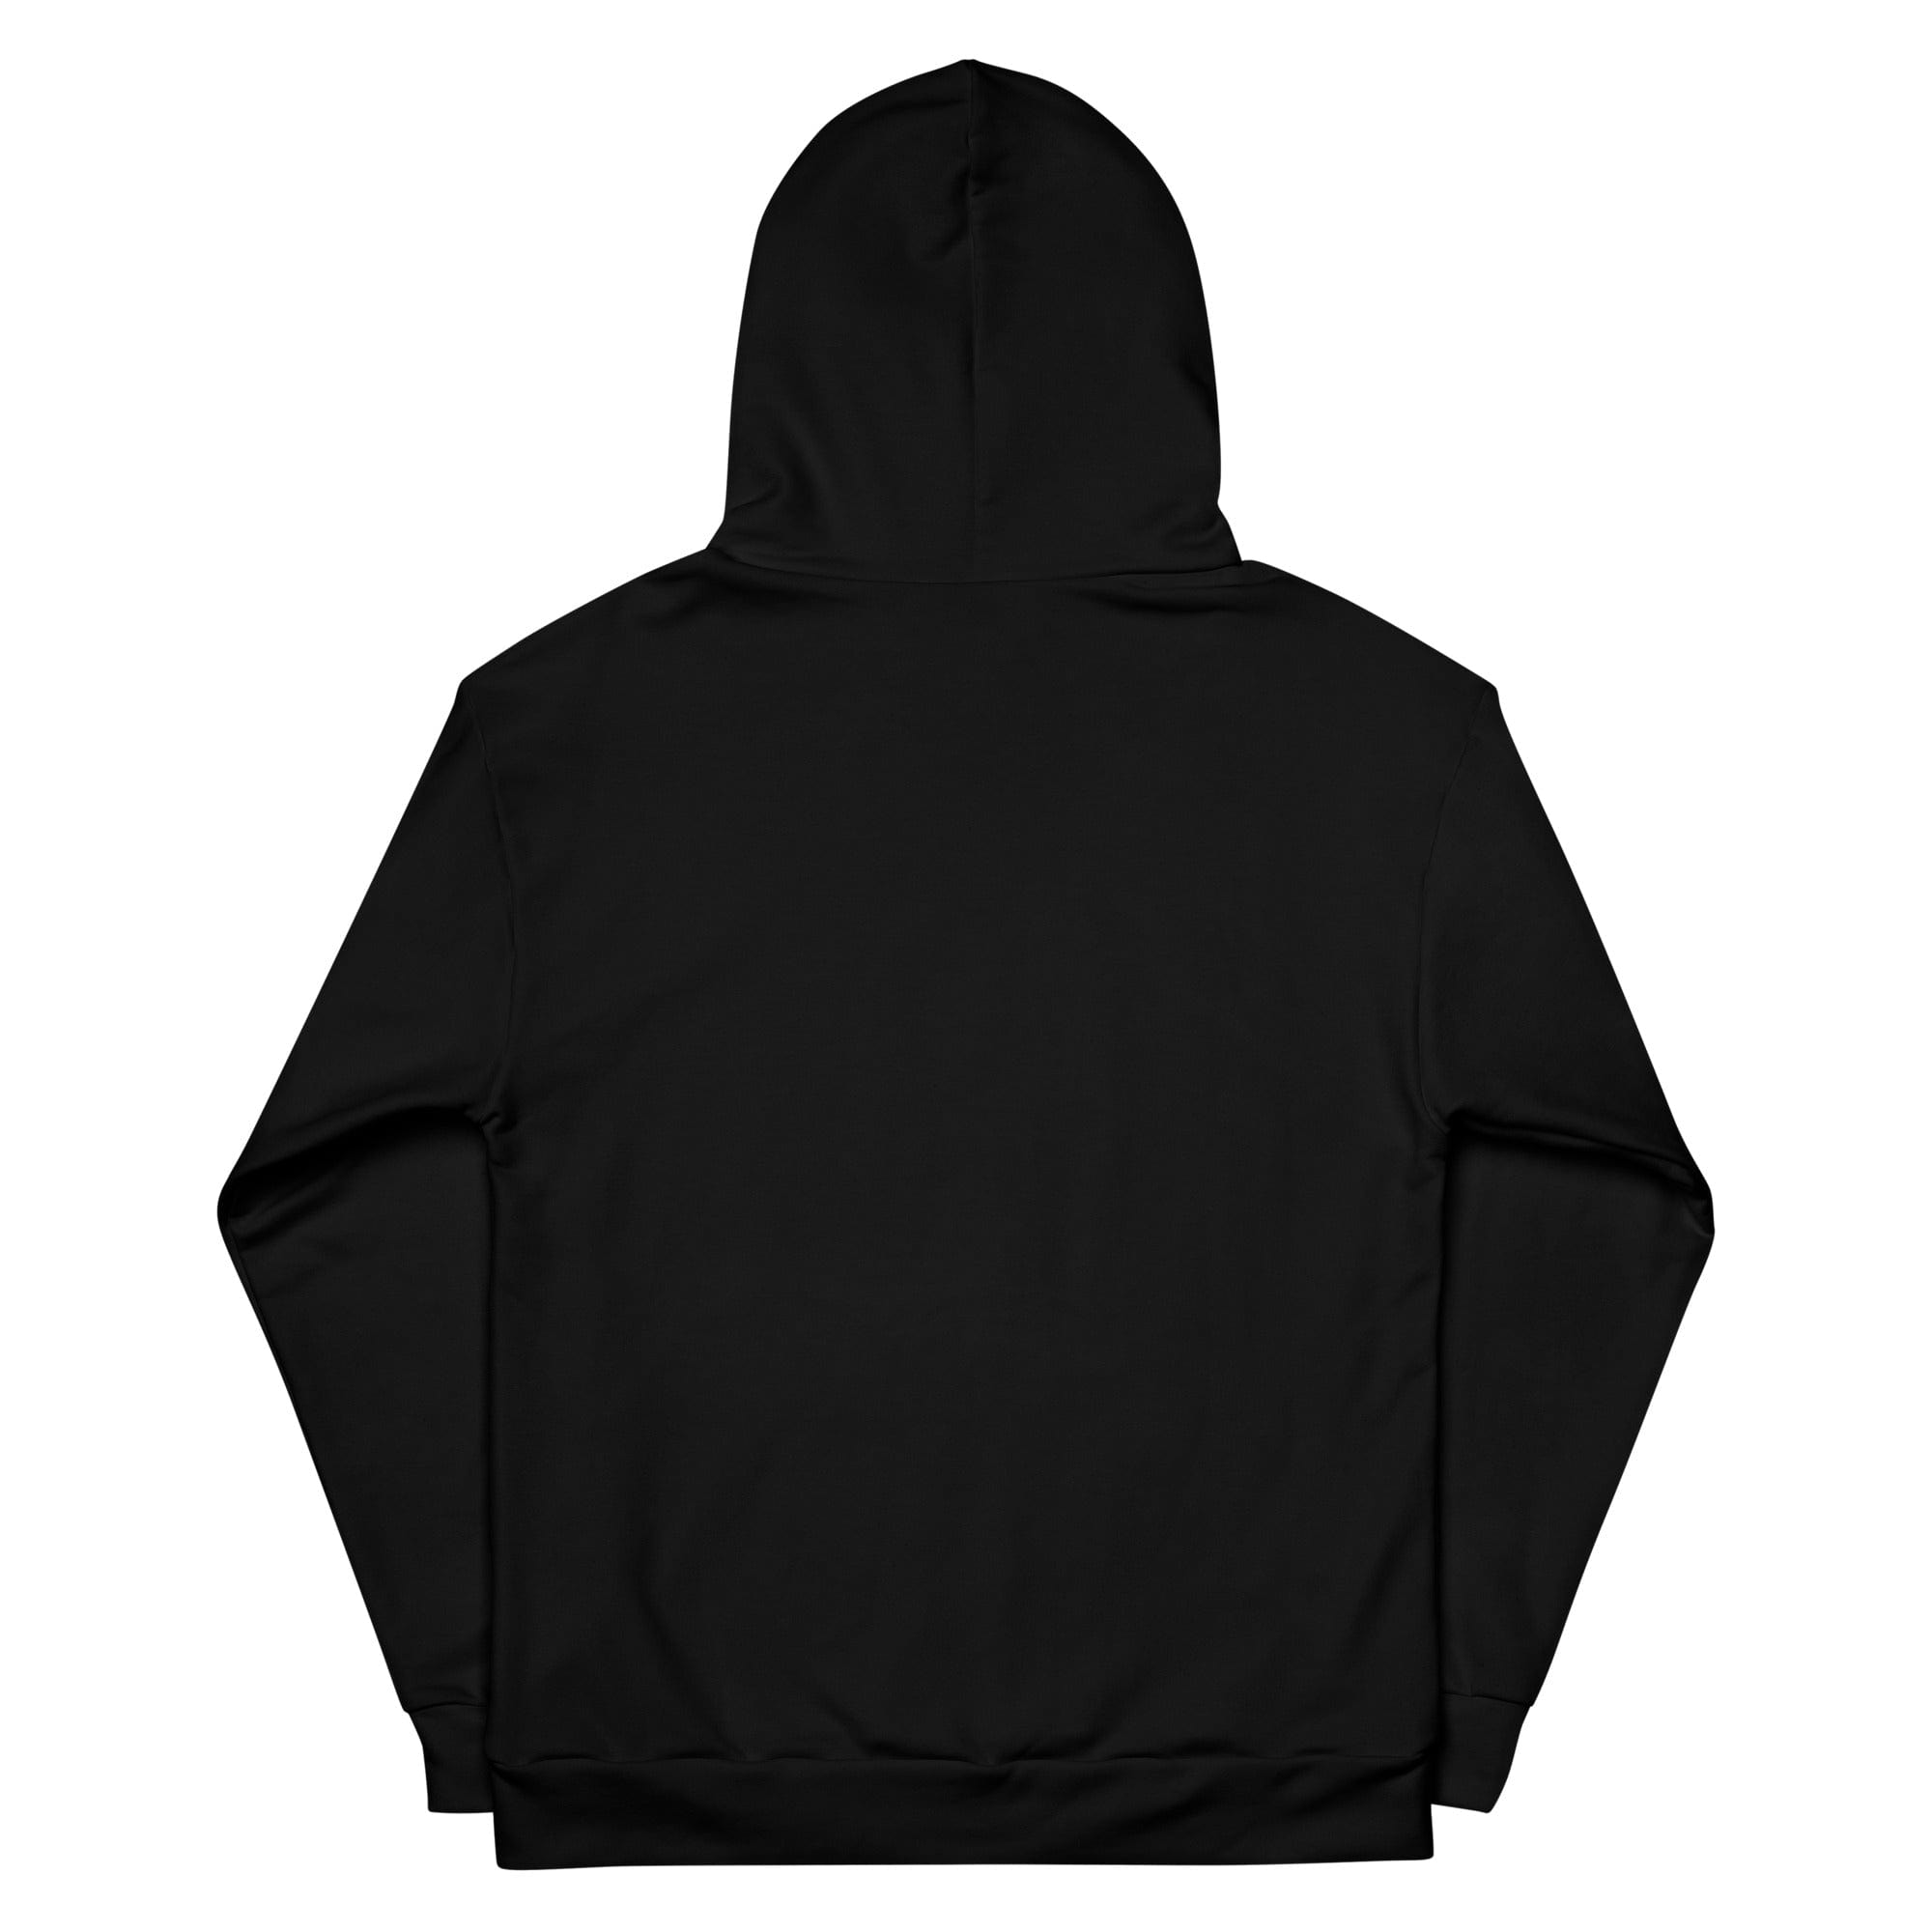 Back view of black unisex fleece hoodie with Fire Cornhole logo in white